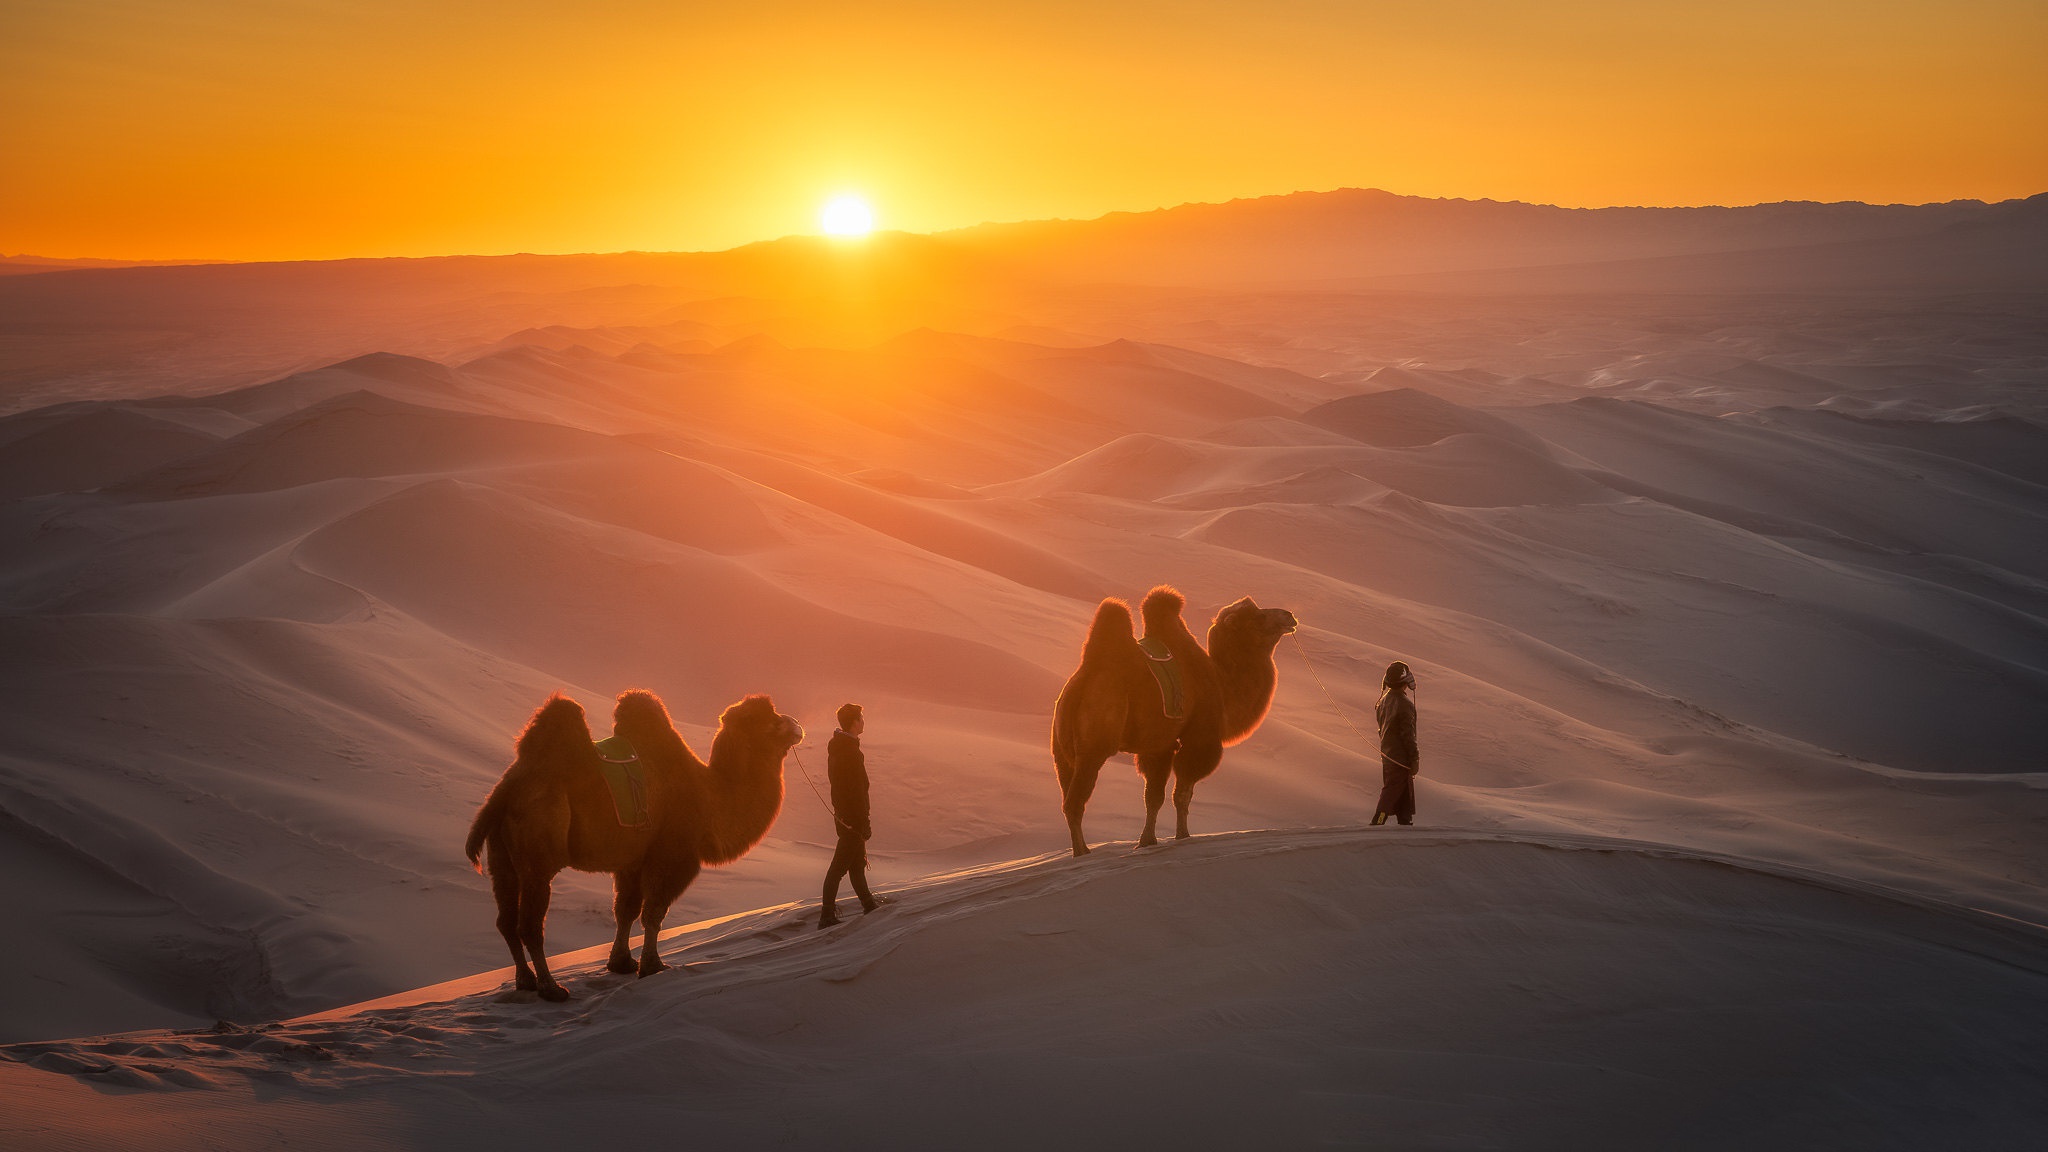 Караван ролики. Бедуин на верблюде. Караван Мекка пустыня. Верблюд в пустыне. Караван в пустыне.